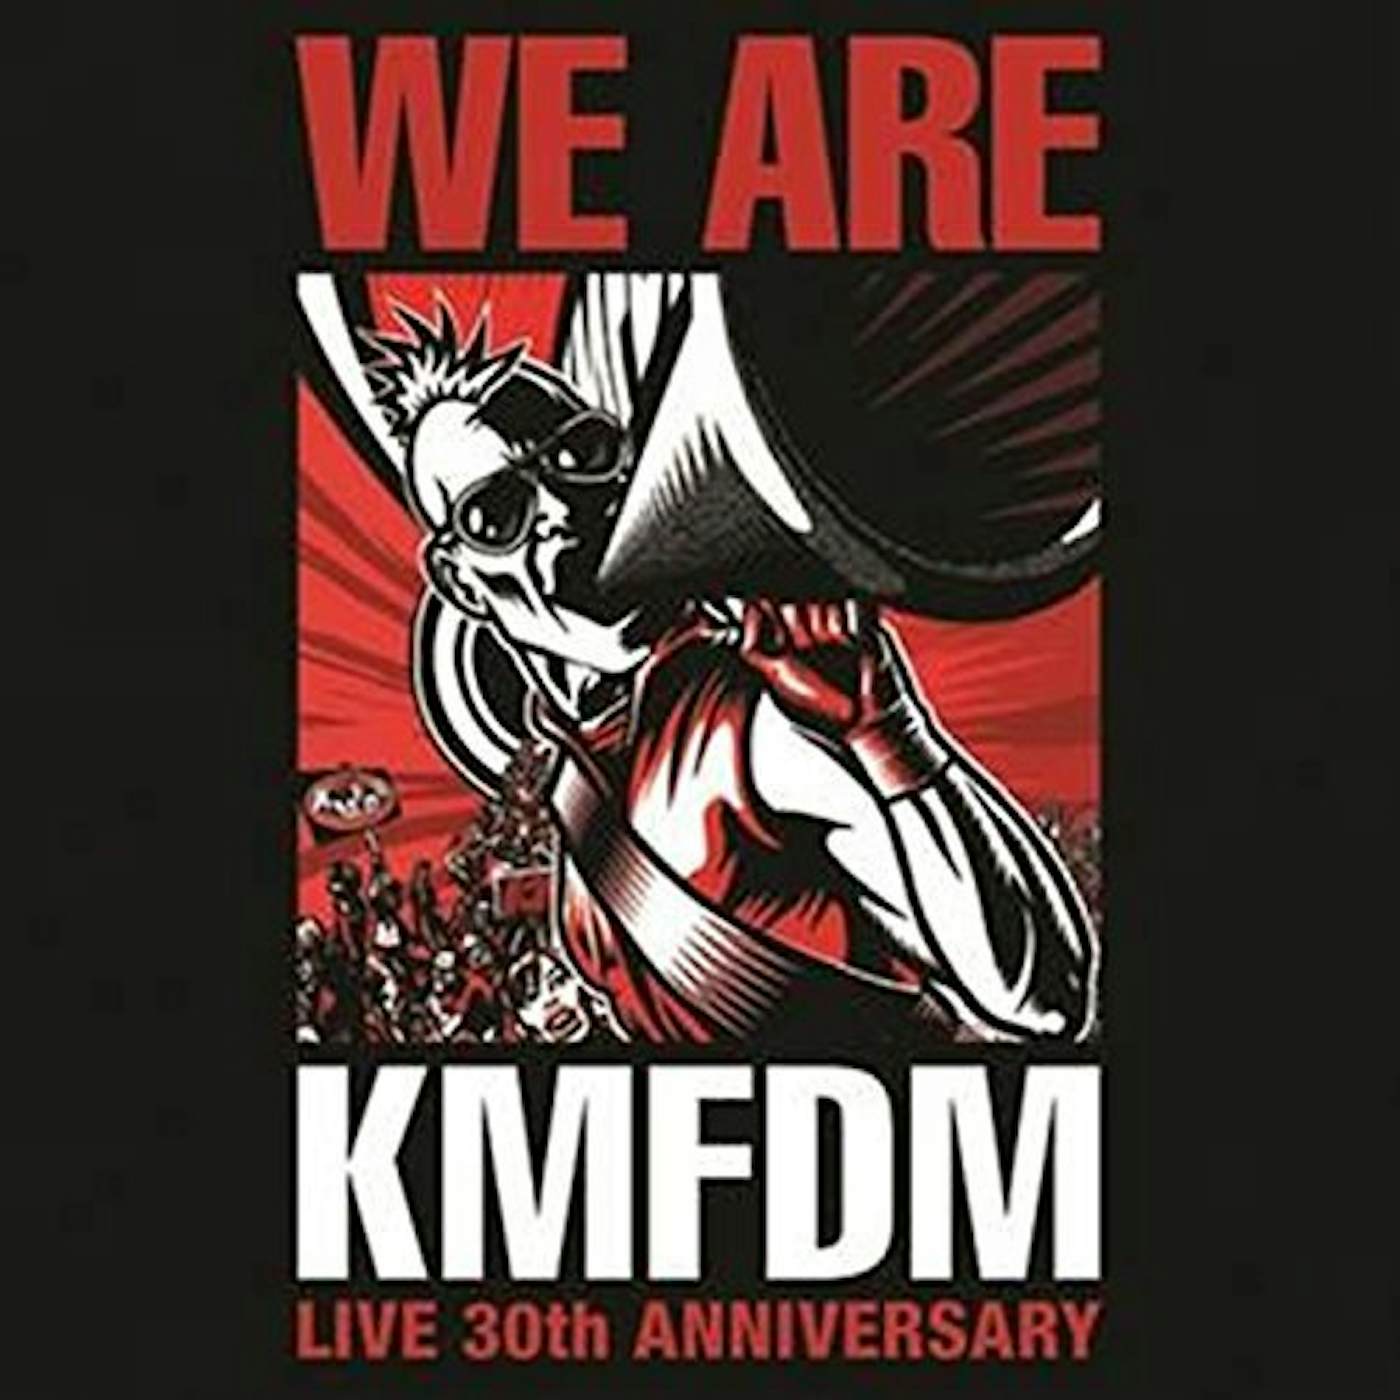 WE ARE KMFDM CD